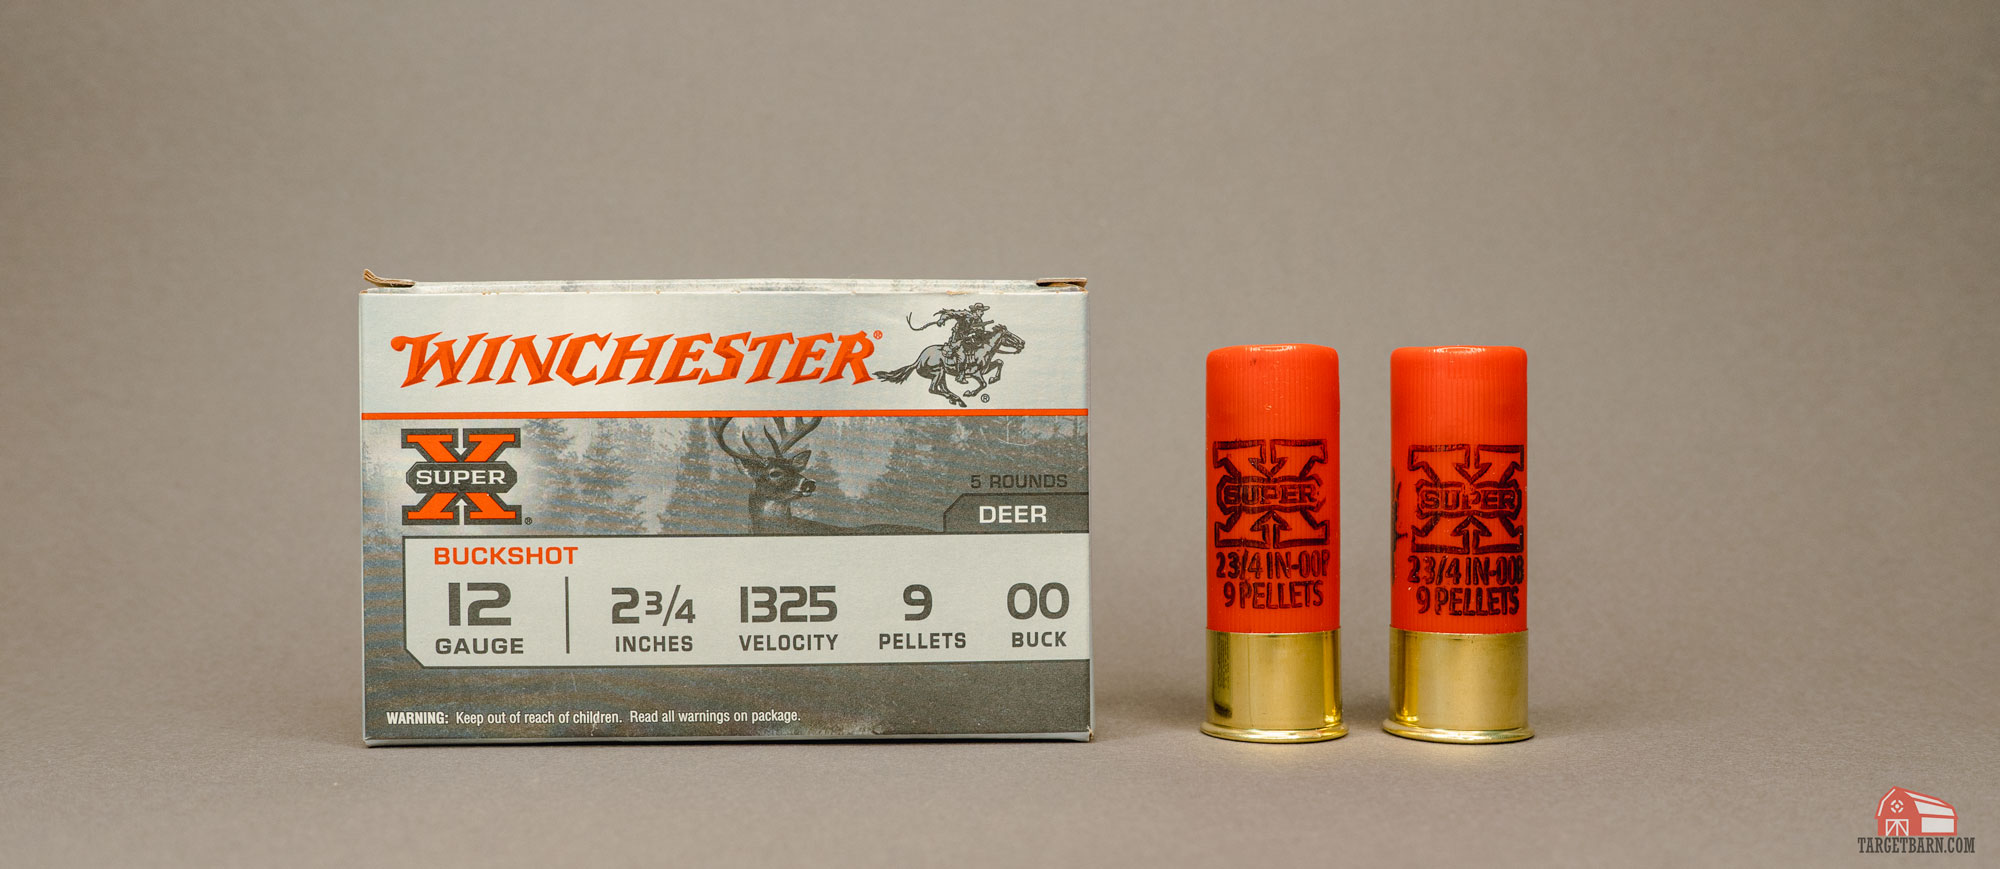 a box of winchester superx 12ga lead shot 00 buck with two shotshells